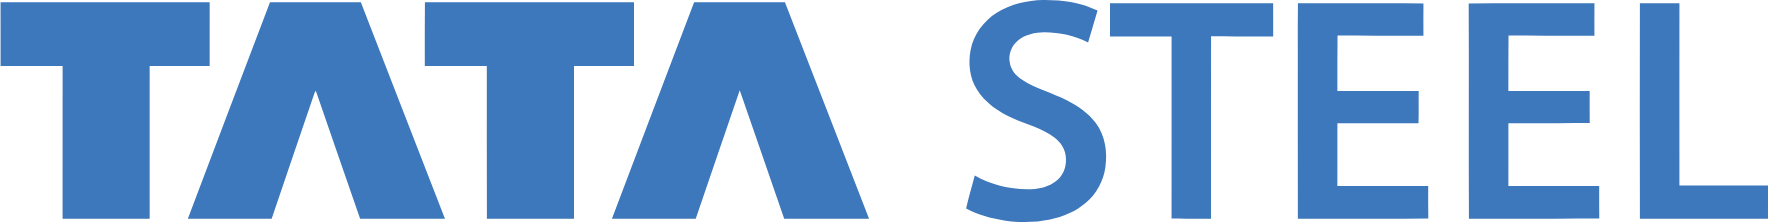 Tata Steel logo large (transparent PNG)